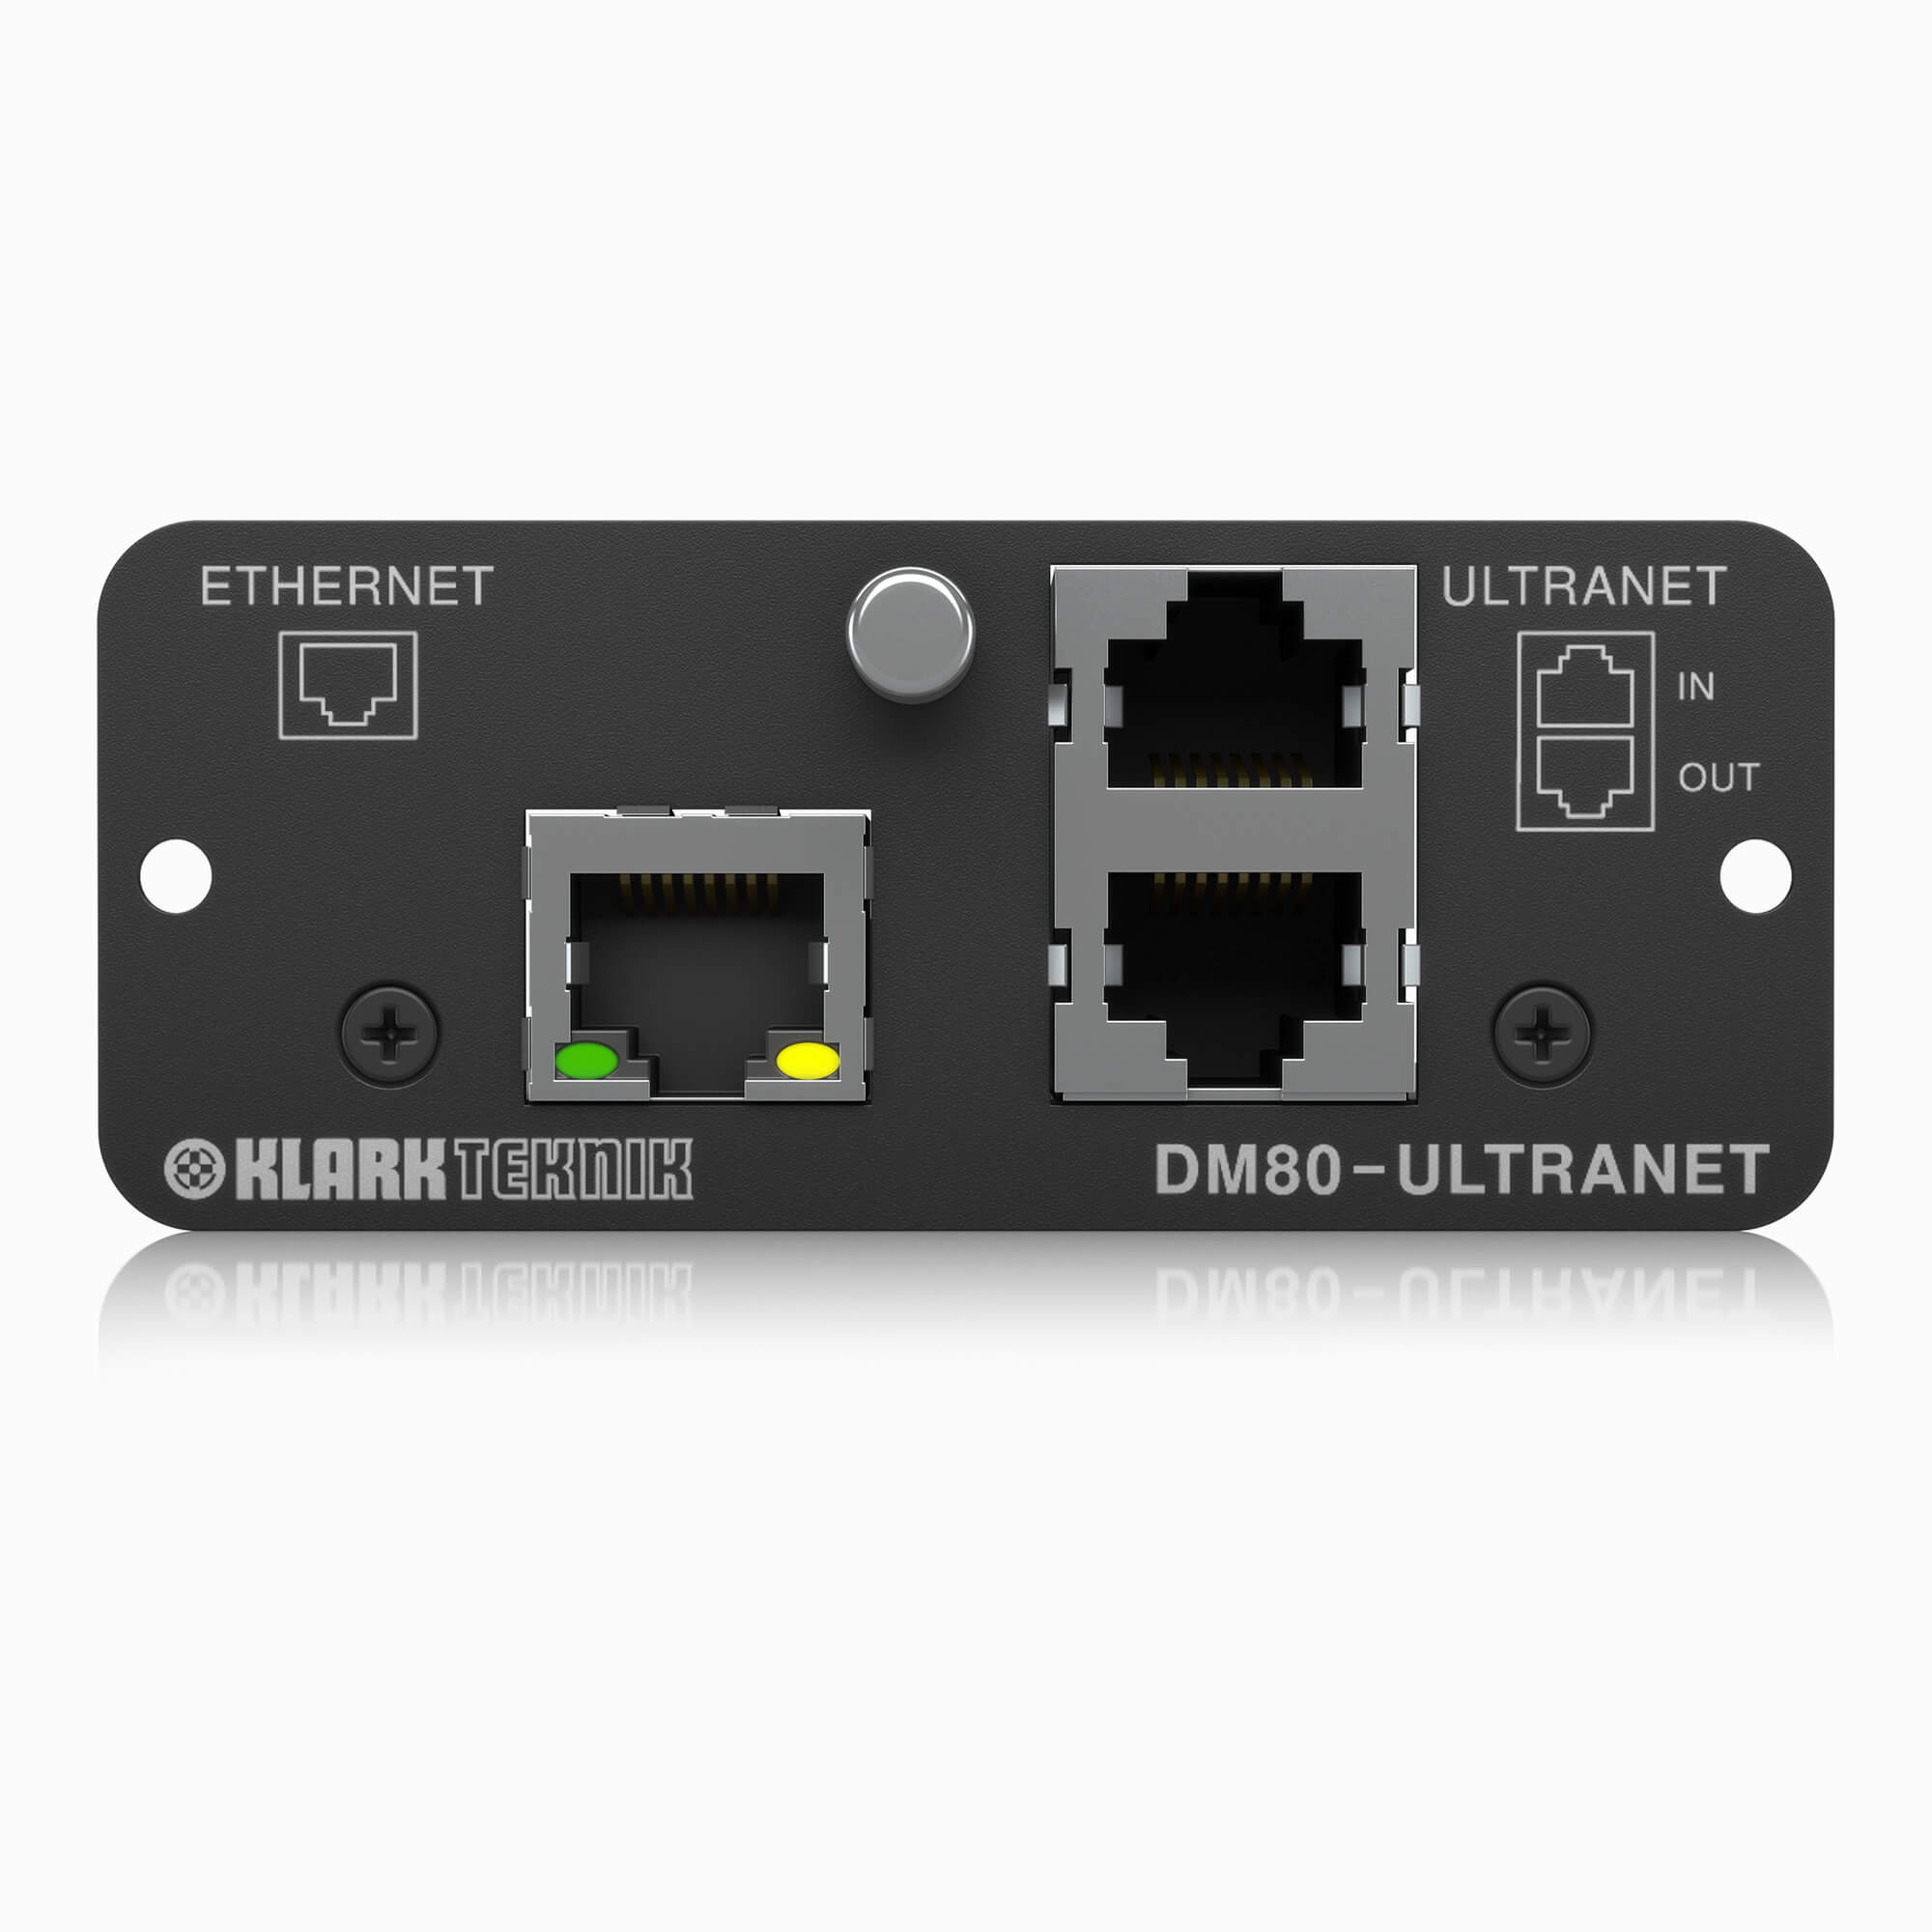 DM80-ULTRANET